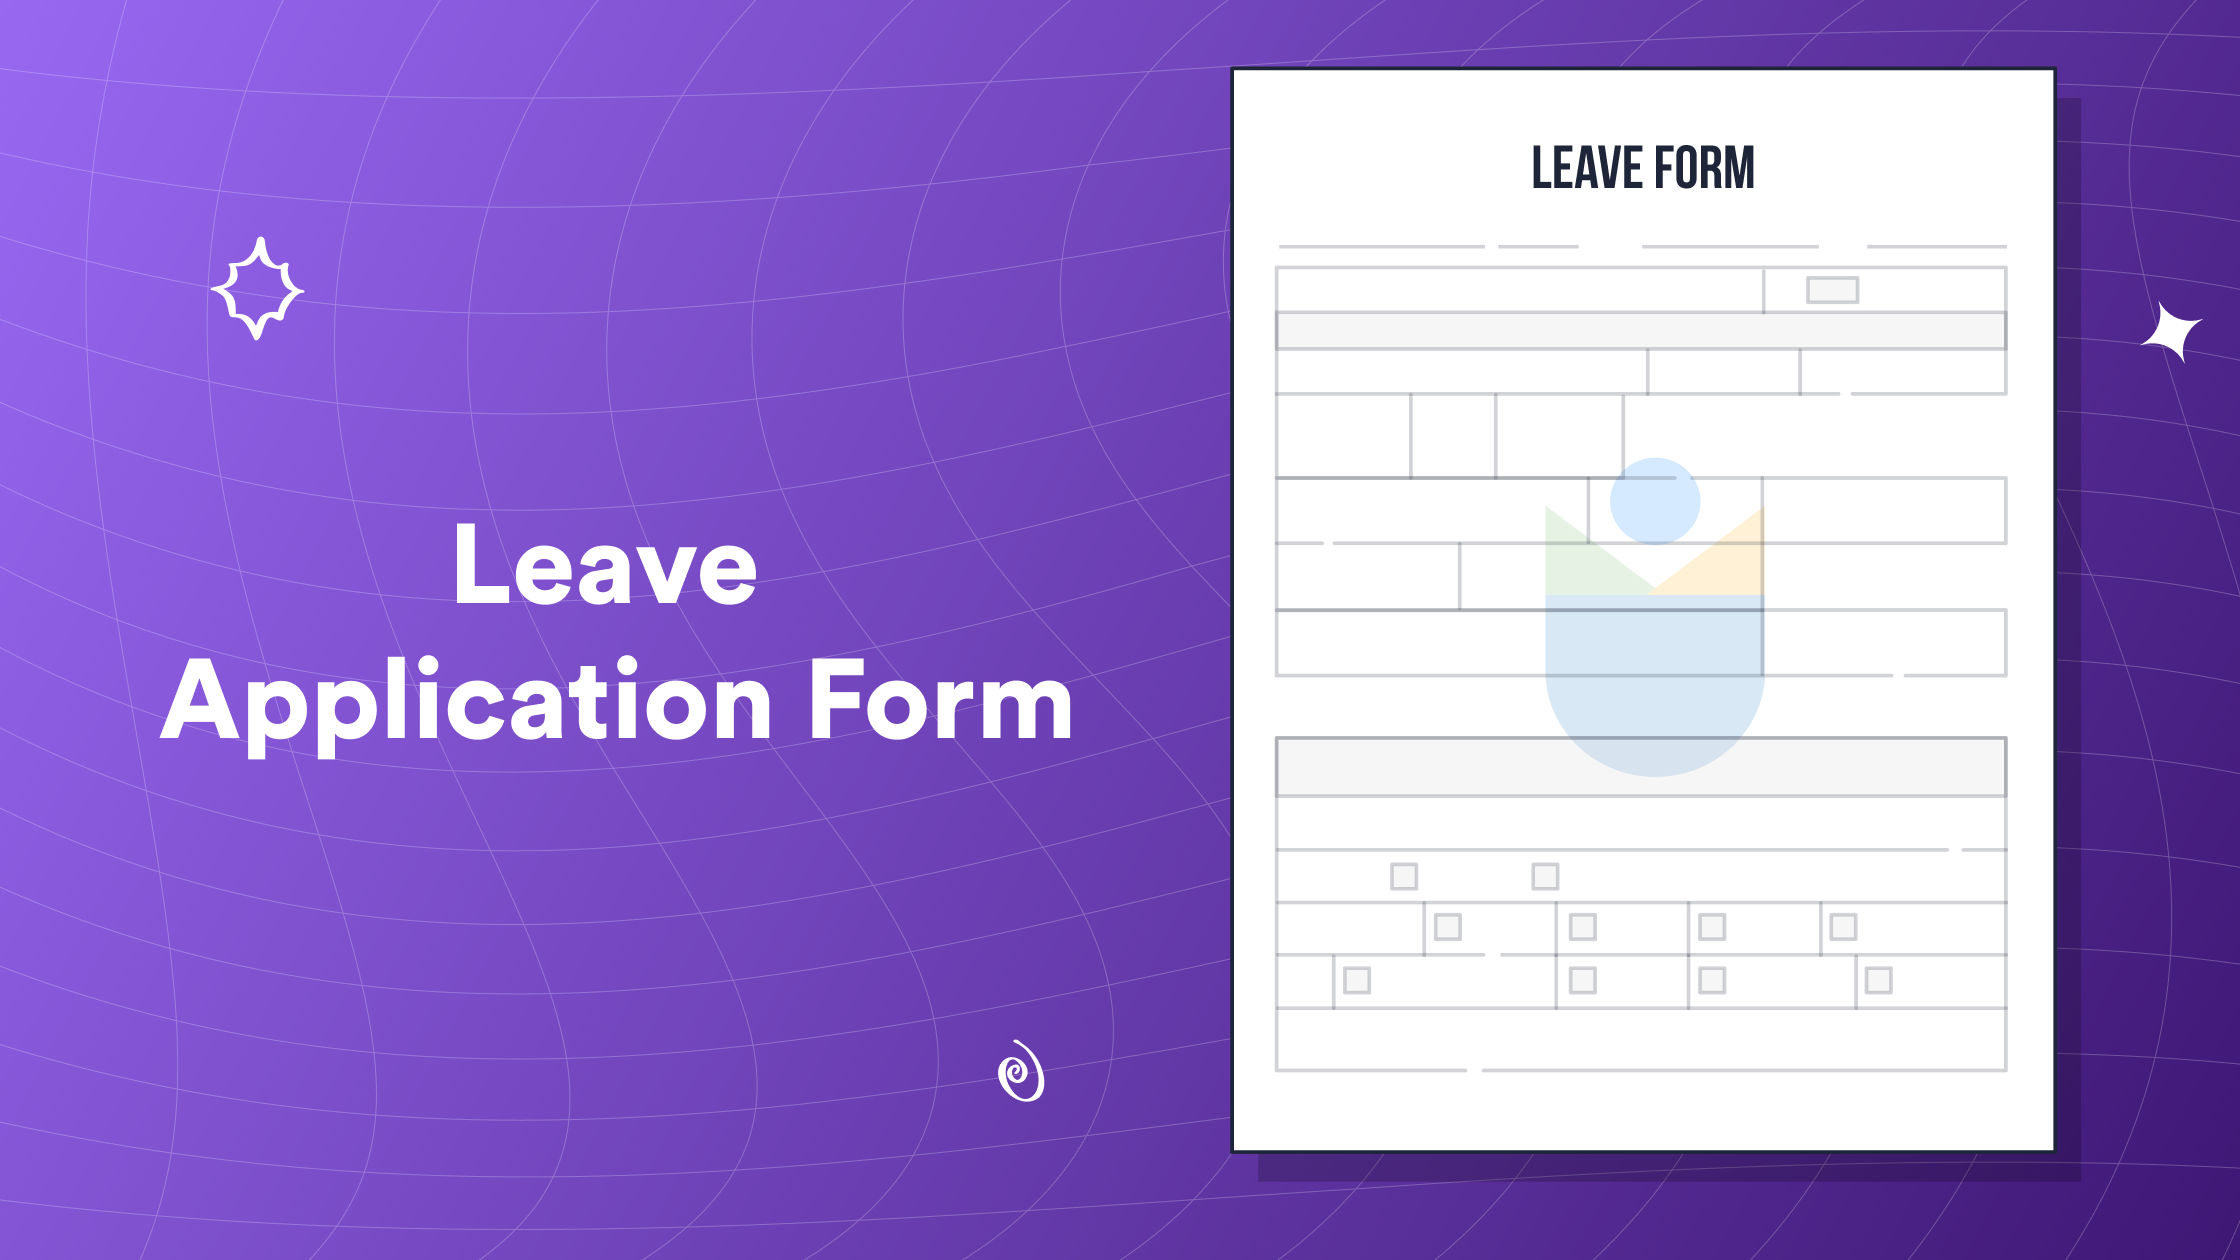 Application For Leave Form